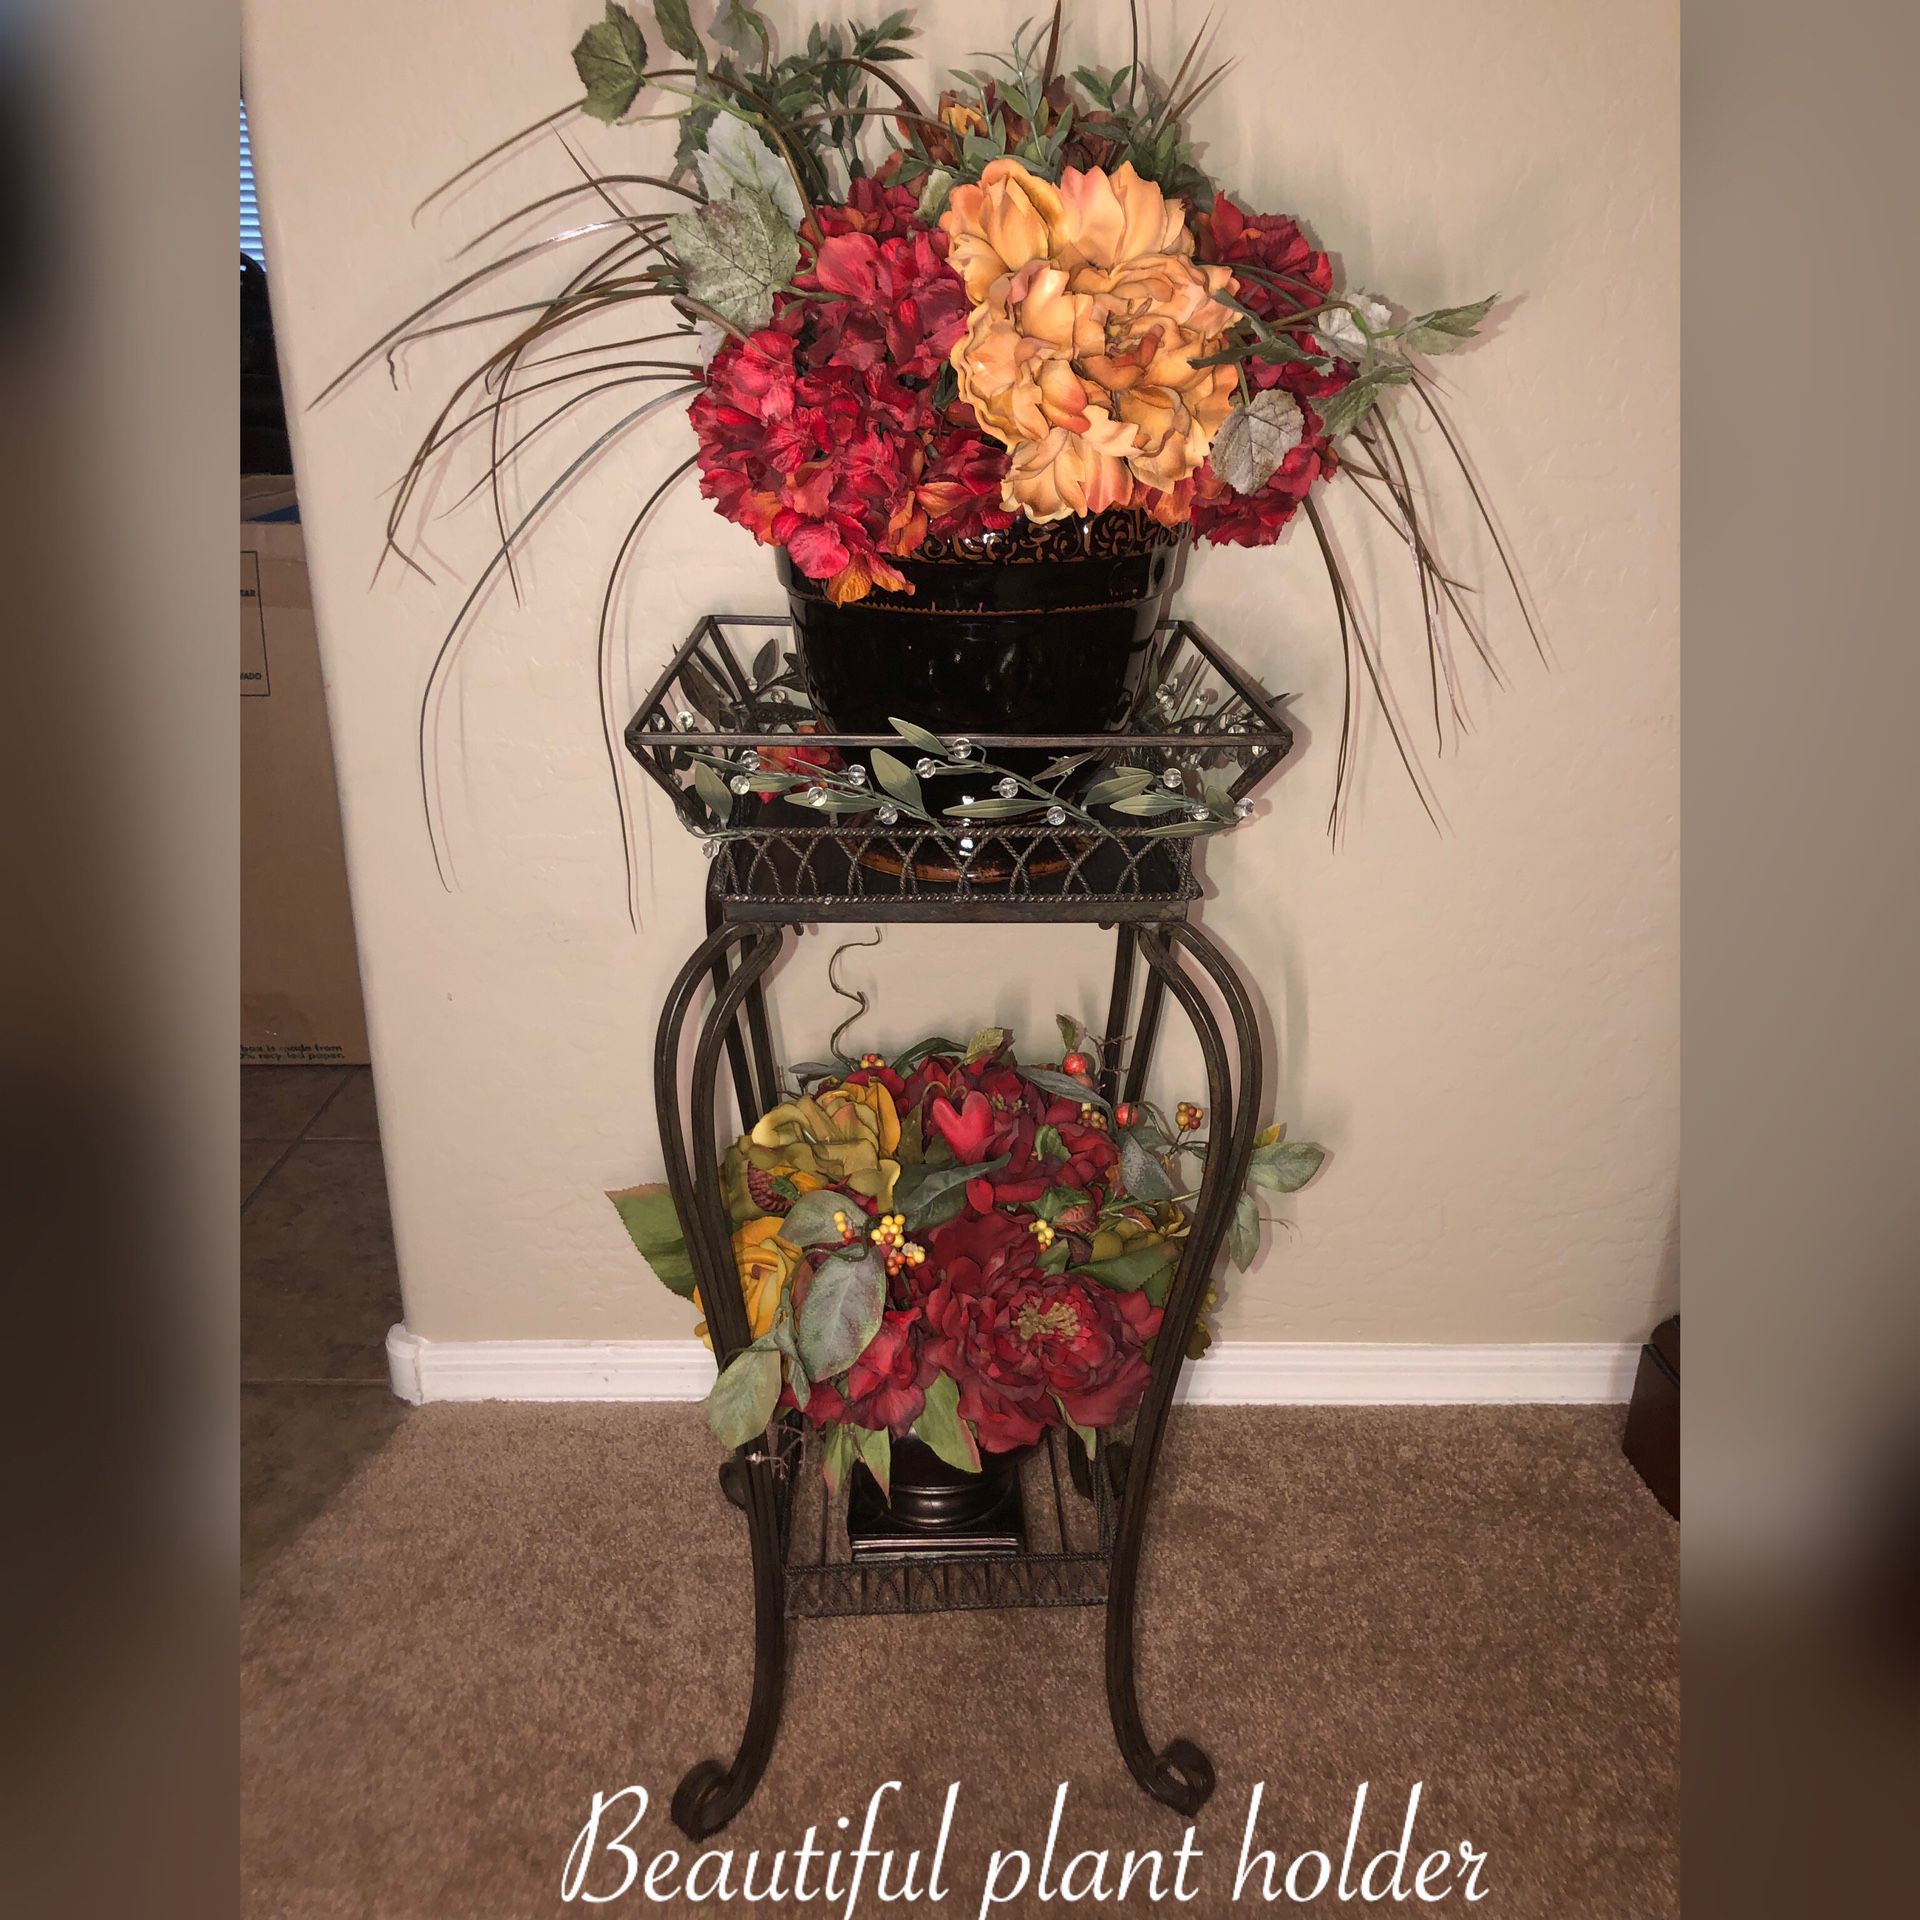 New beautiful plant holder with 2 beautiful flower arrangement $60